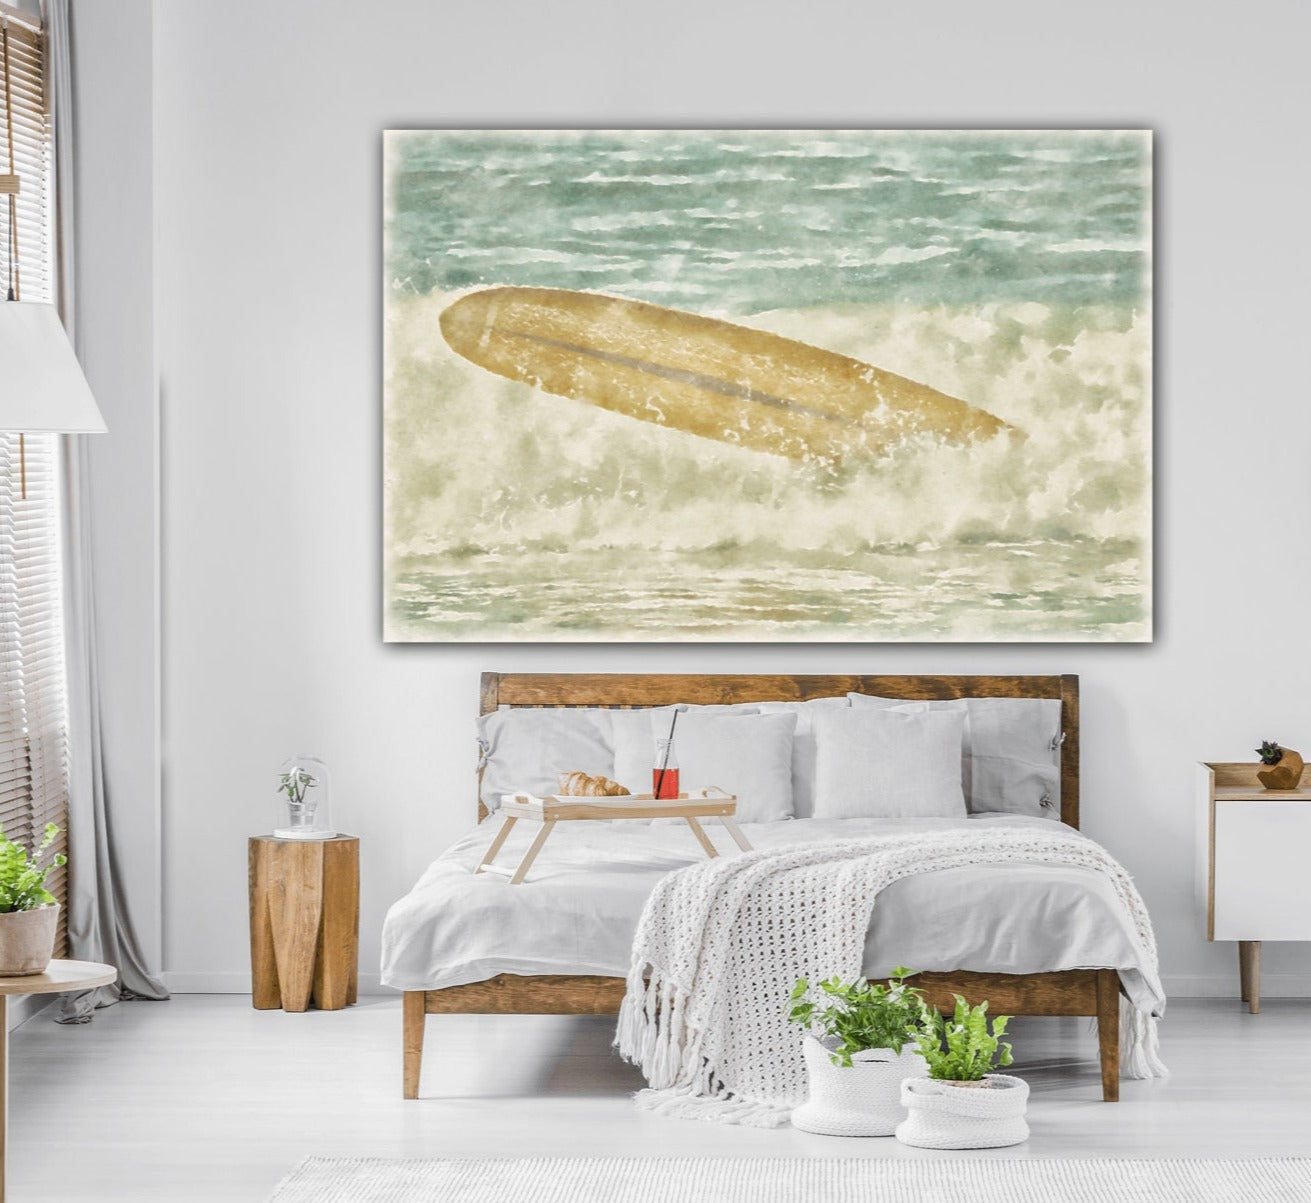 runaway surfboard acrylic print bedroom decor by jacqueline mb designs 